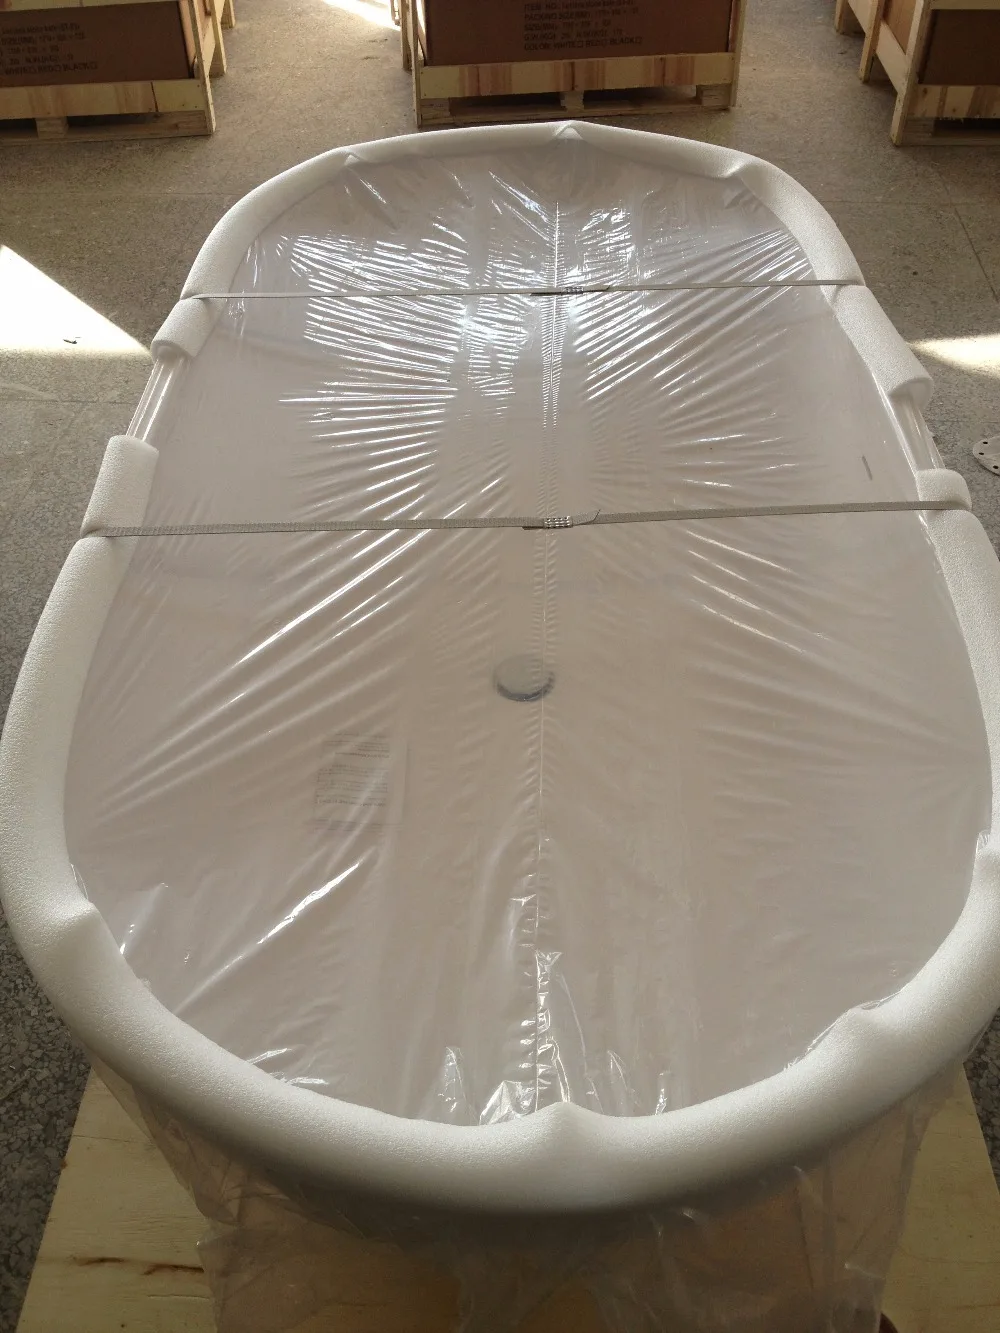 Italian style most popular pure white cast stone freestanding bathtub ST-12 1800